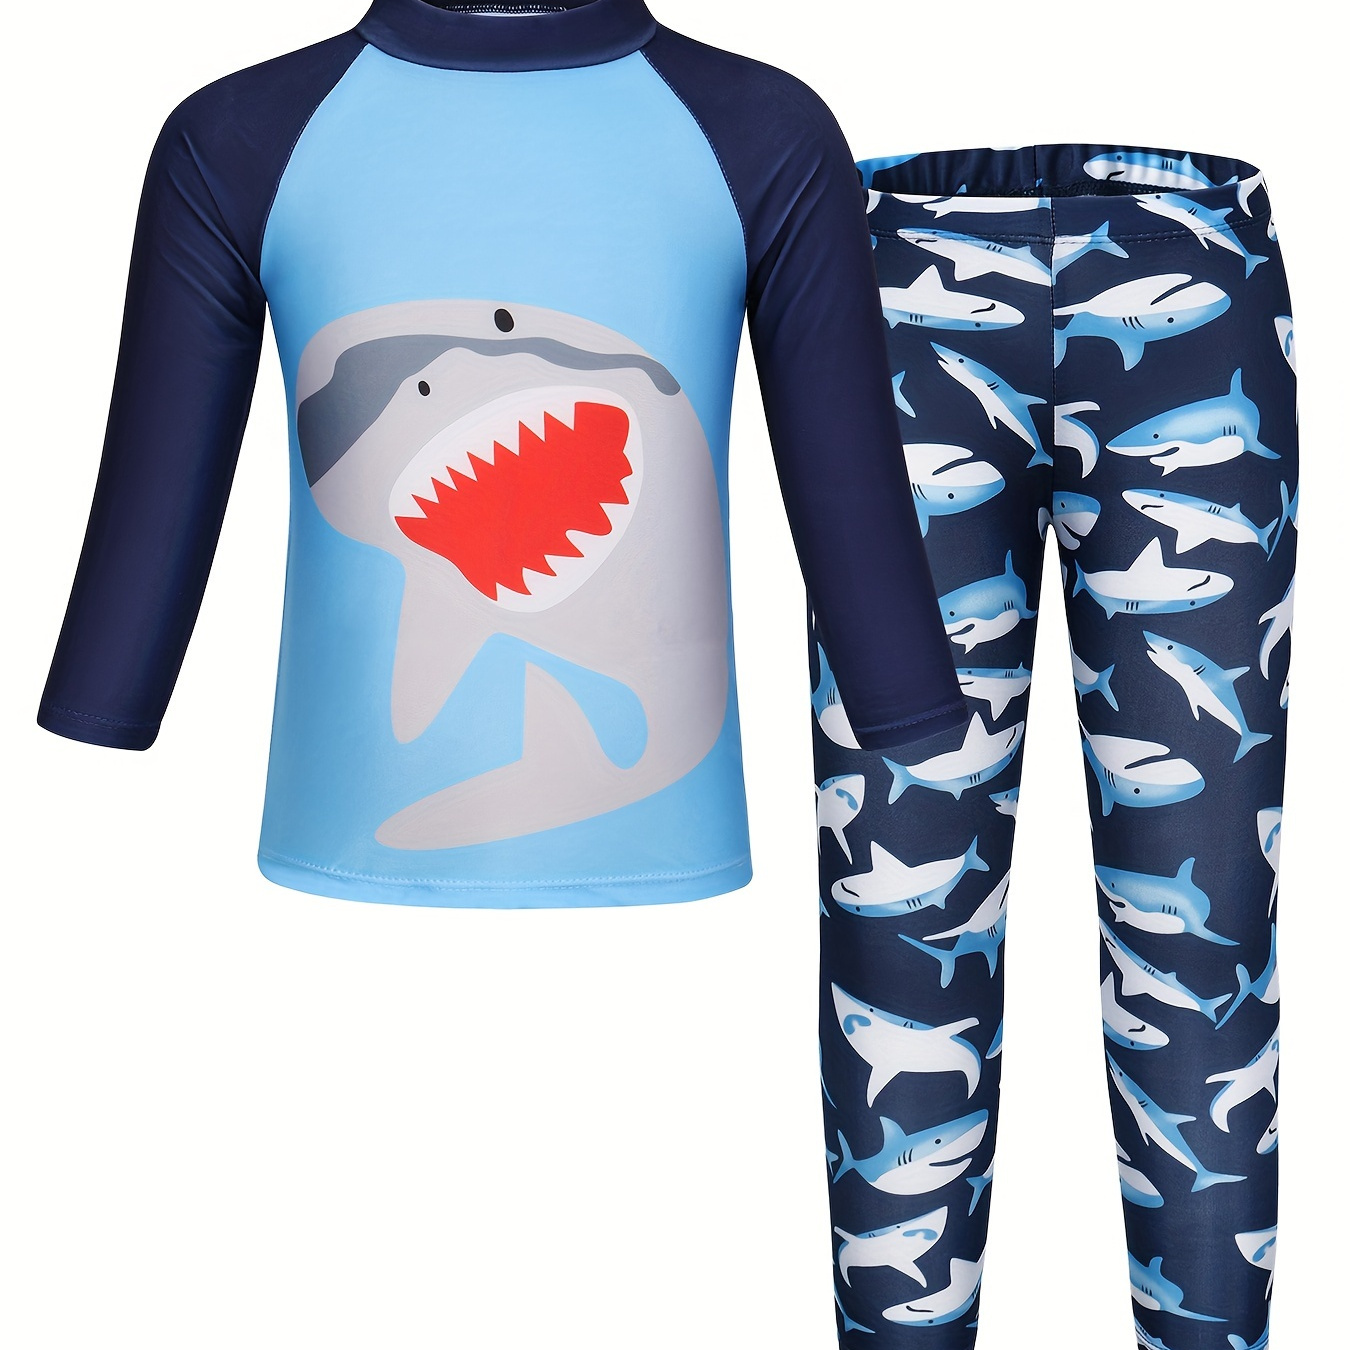 

2pcs Cartoon Shark Pattern Swimsuit For Boys, Long Sleeve T-shirt & Swim Trunks Set, Stretchy Surfing Suit, Boys Swimwear For Summer Beach Vacation